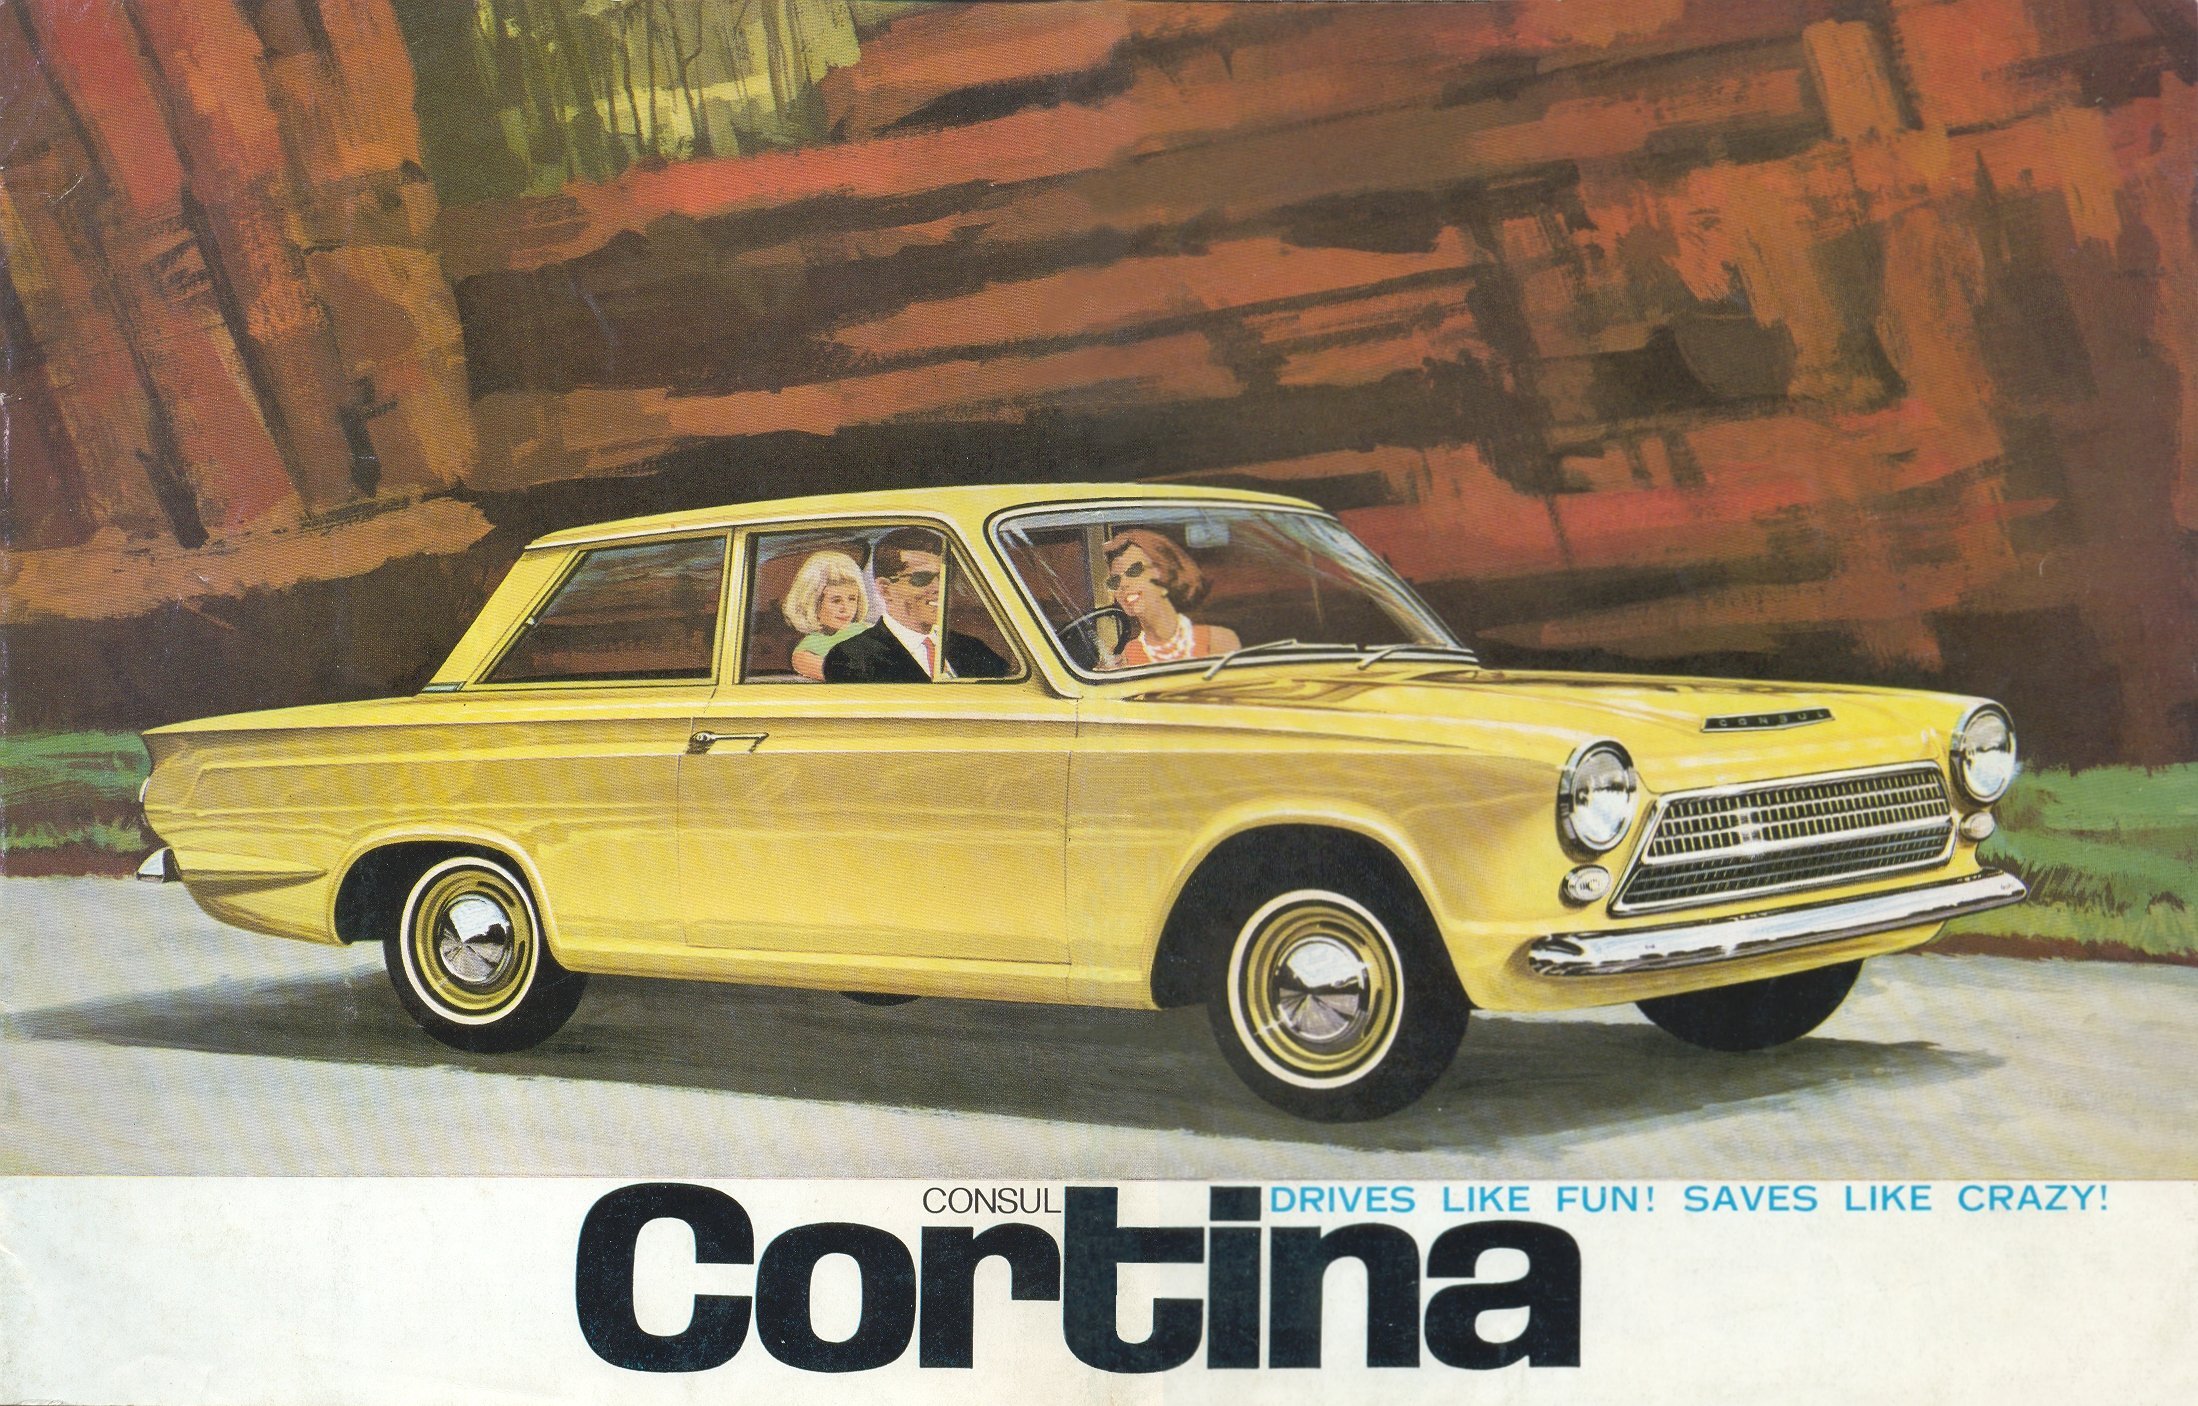 1963_Ford_Cortina-01